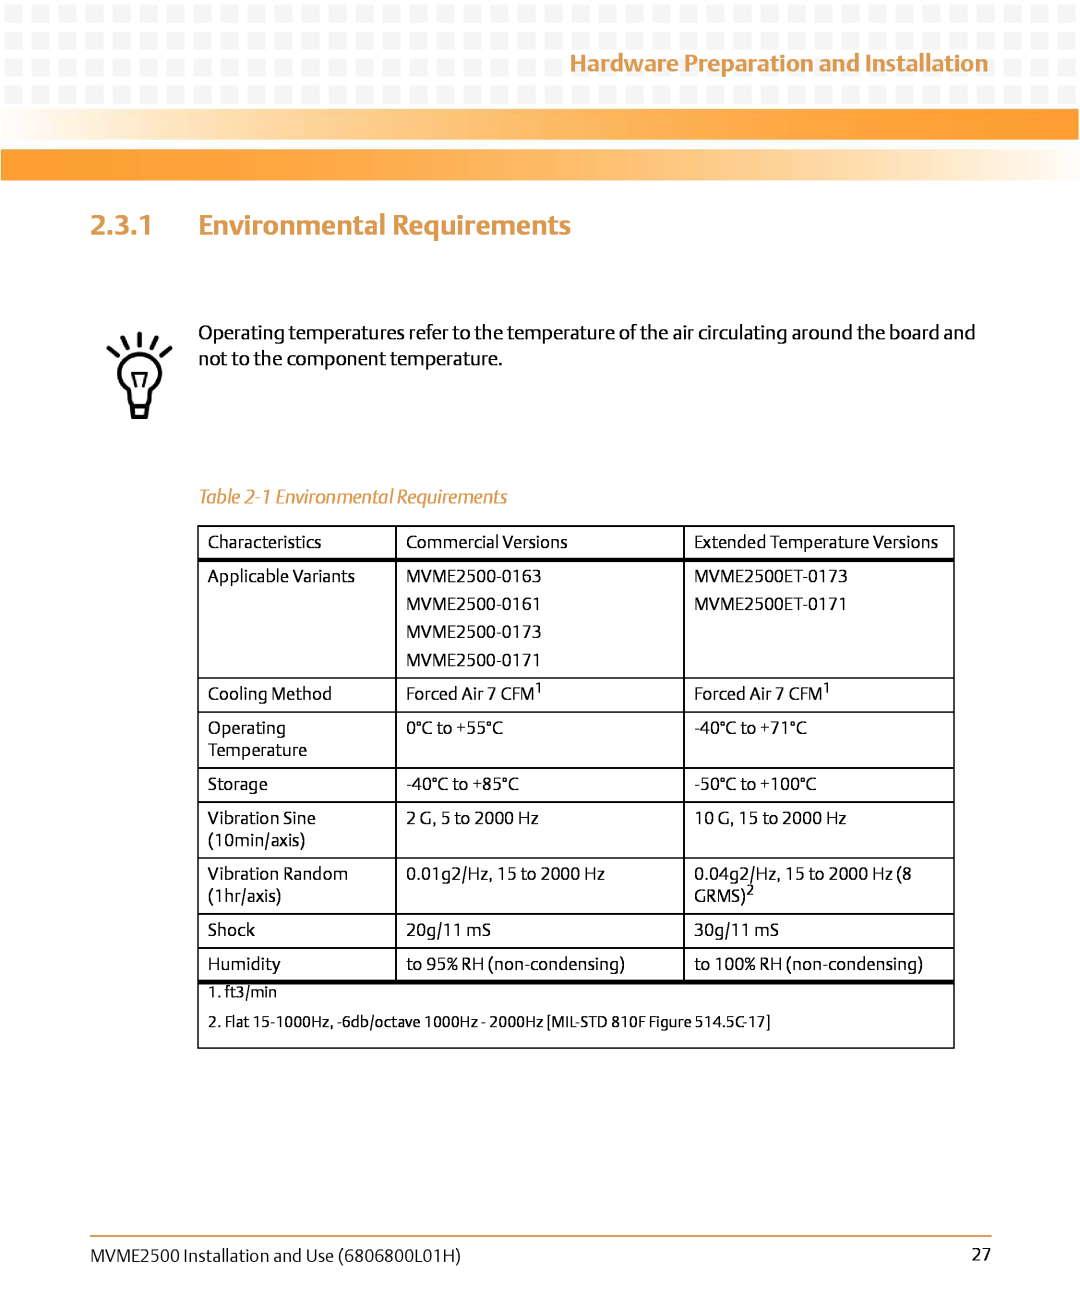 Emerson MVME2500 manual 1 Environmental Requirements, Hardware Preparation and Installation 